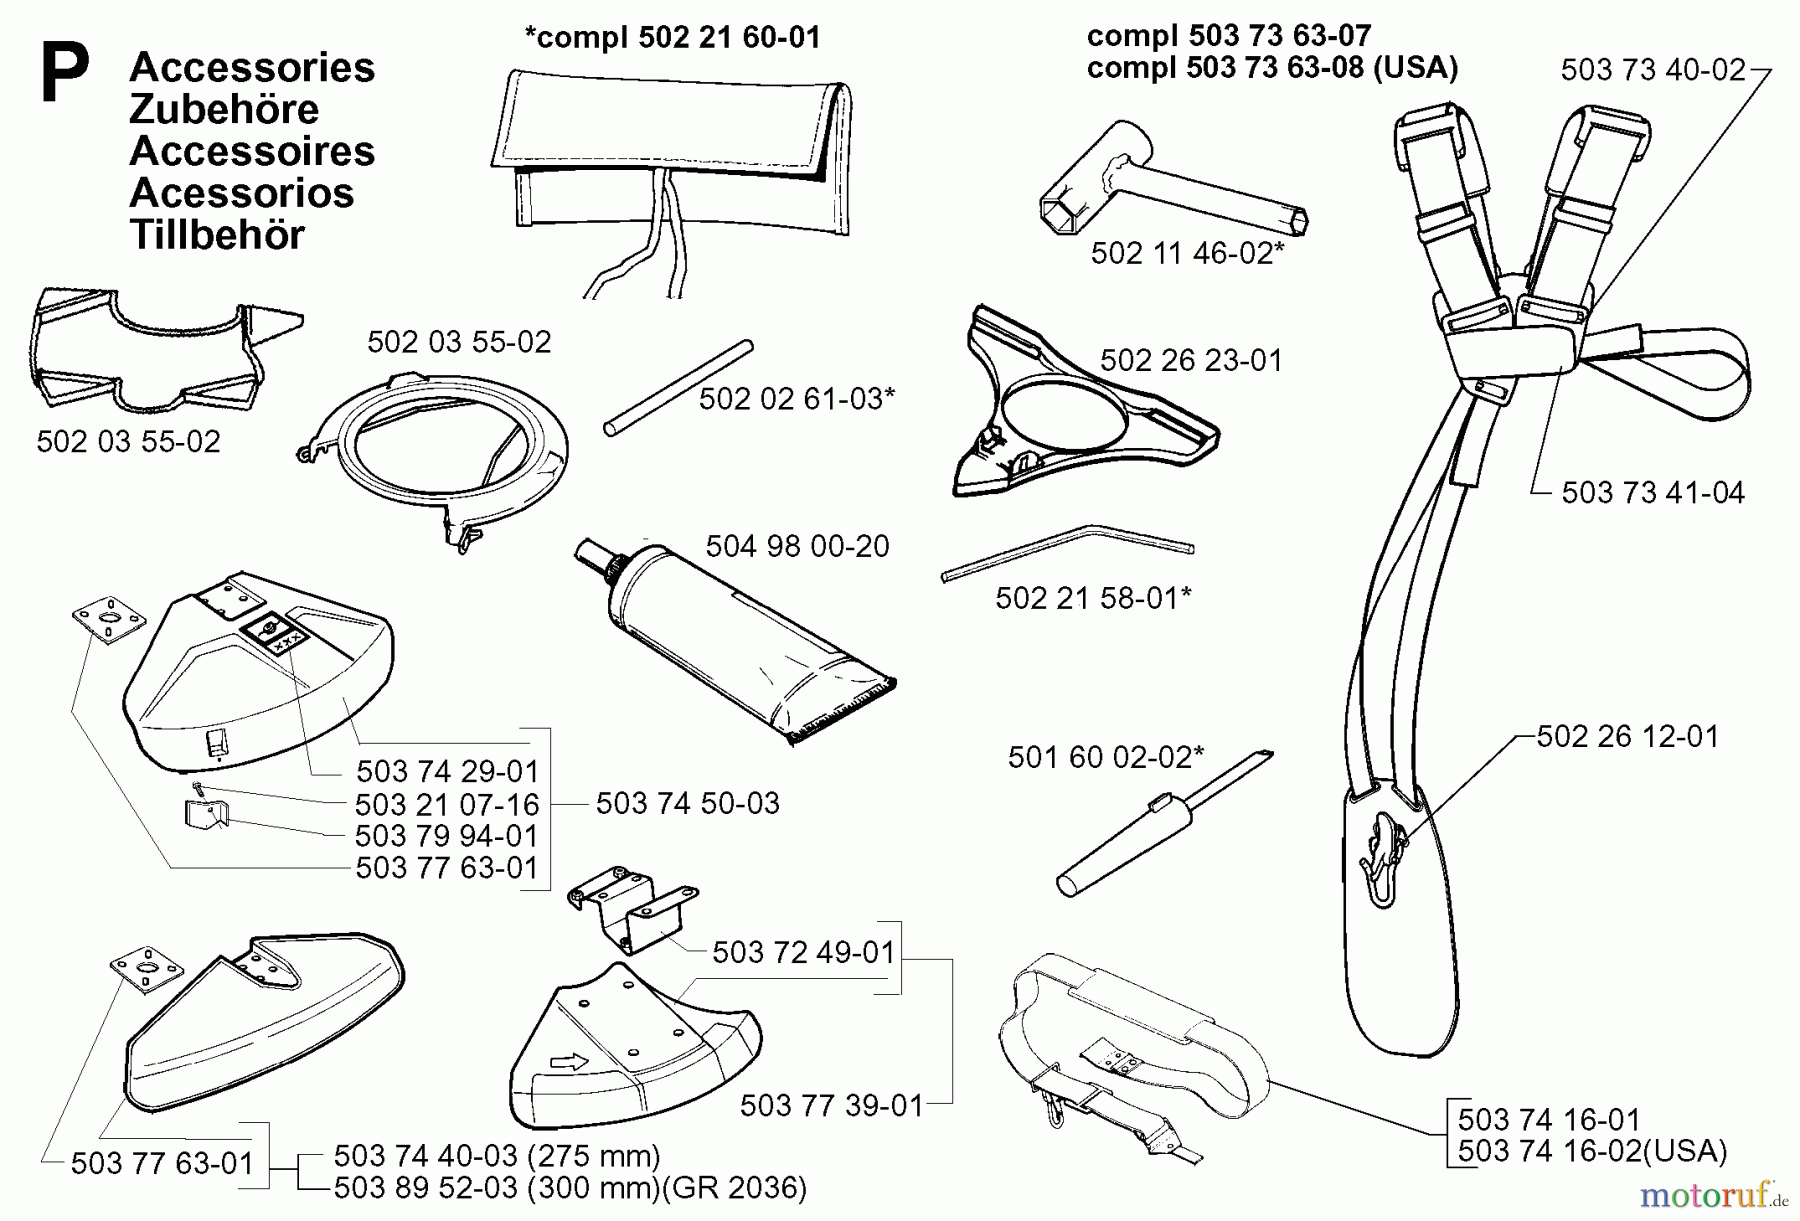  Jonsered Motorsensen, Trimmer GR2036 - Jonsered String/Brush Trimmer (1998-02) ACCESSORIES